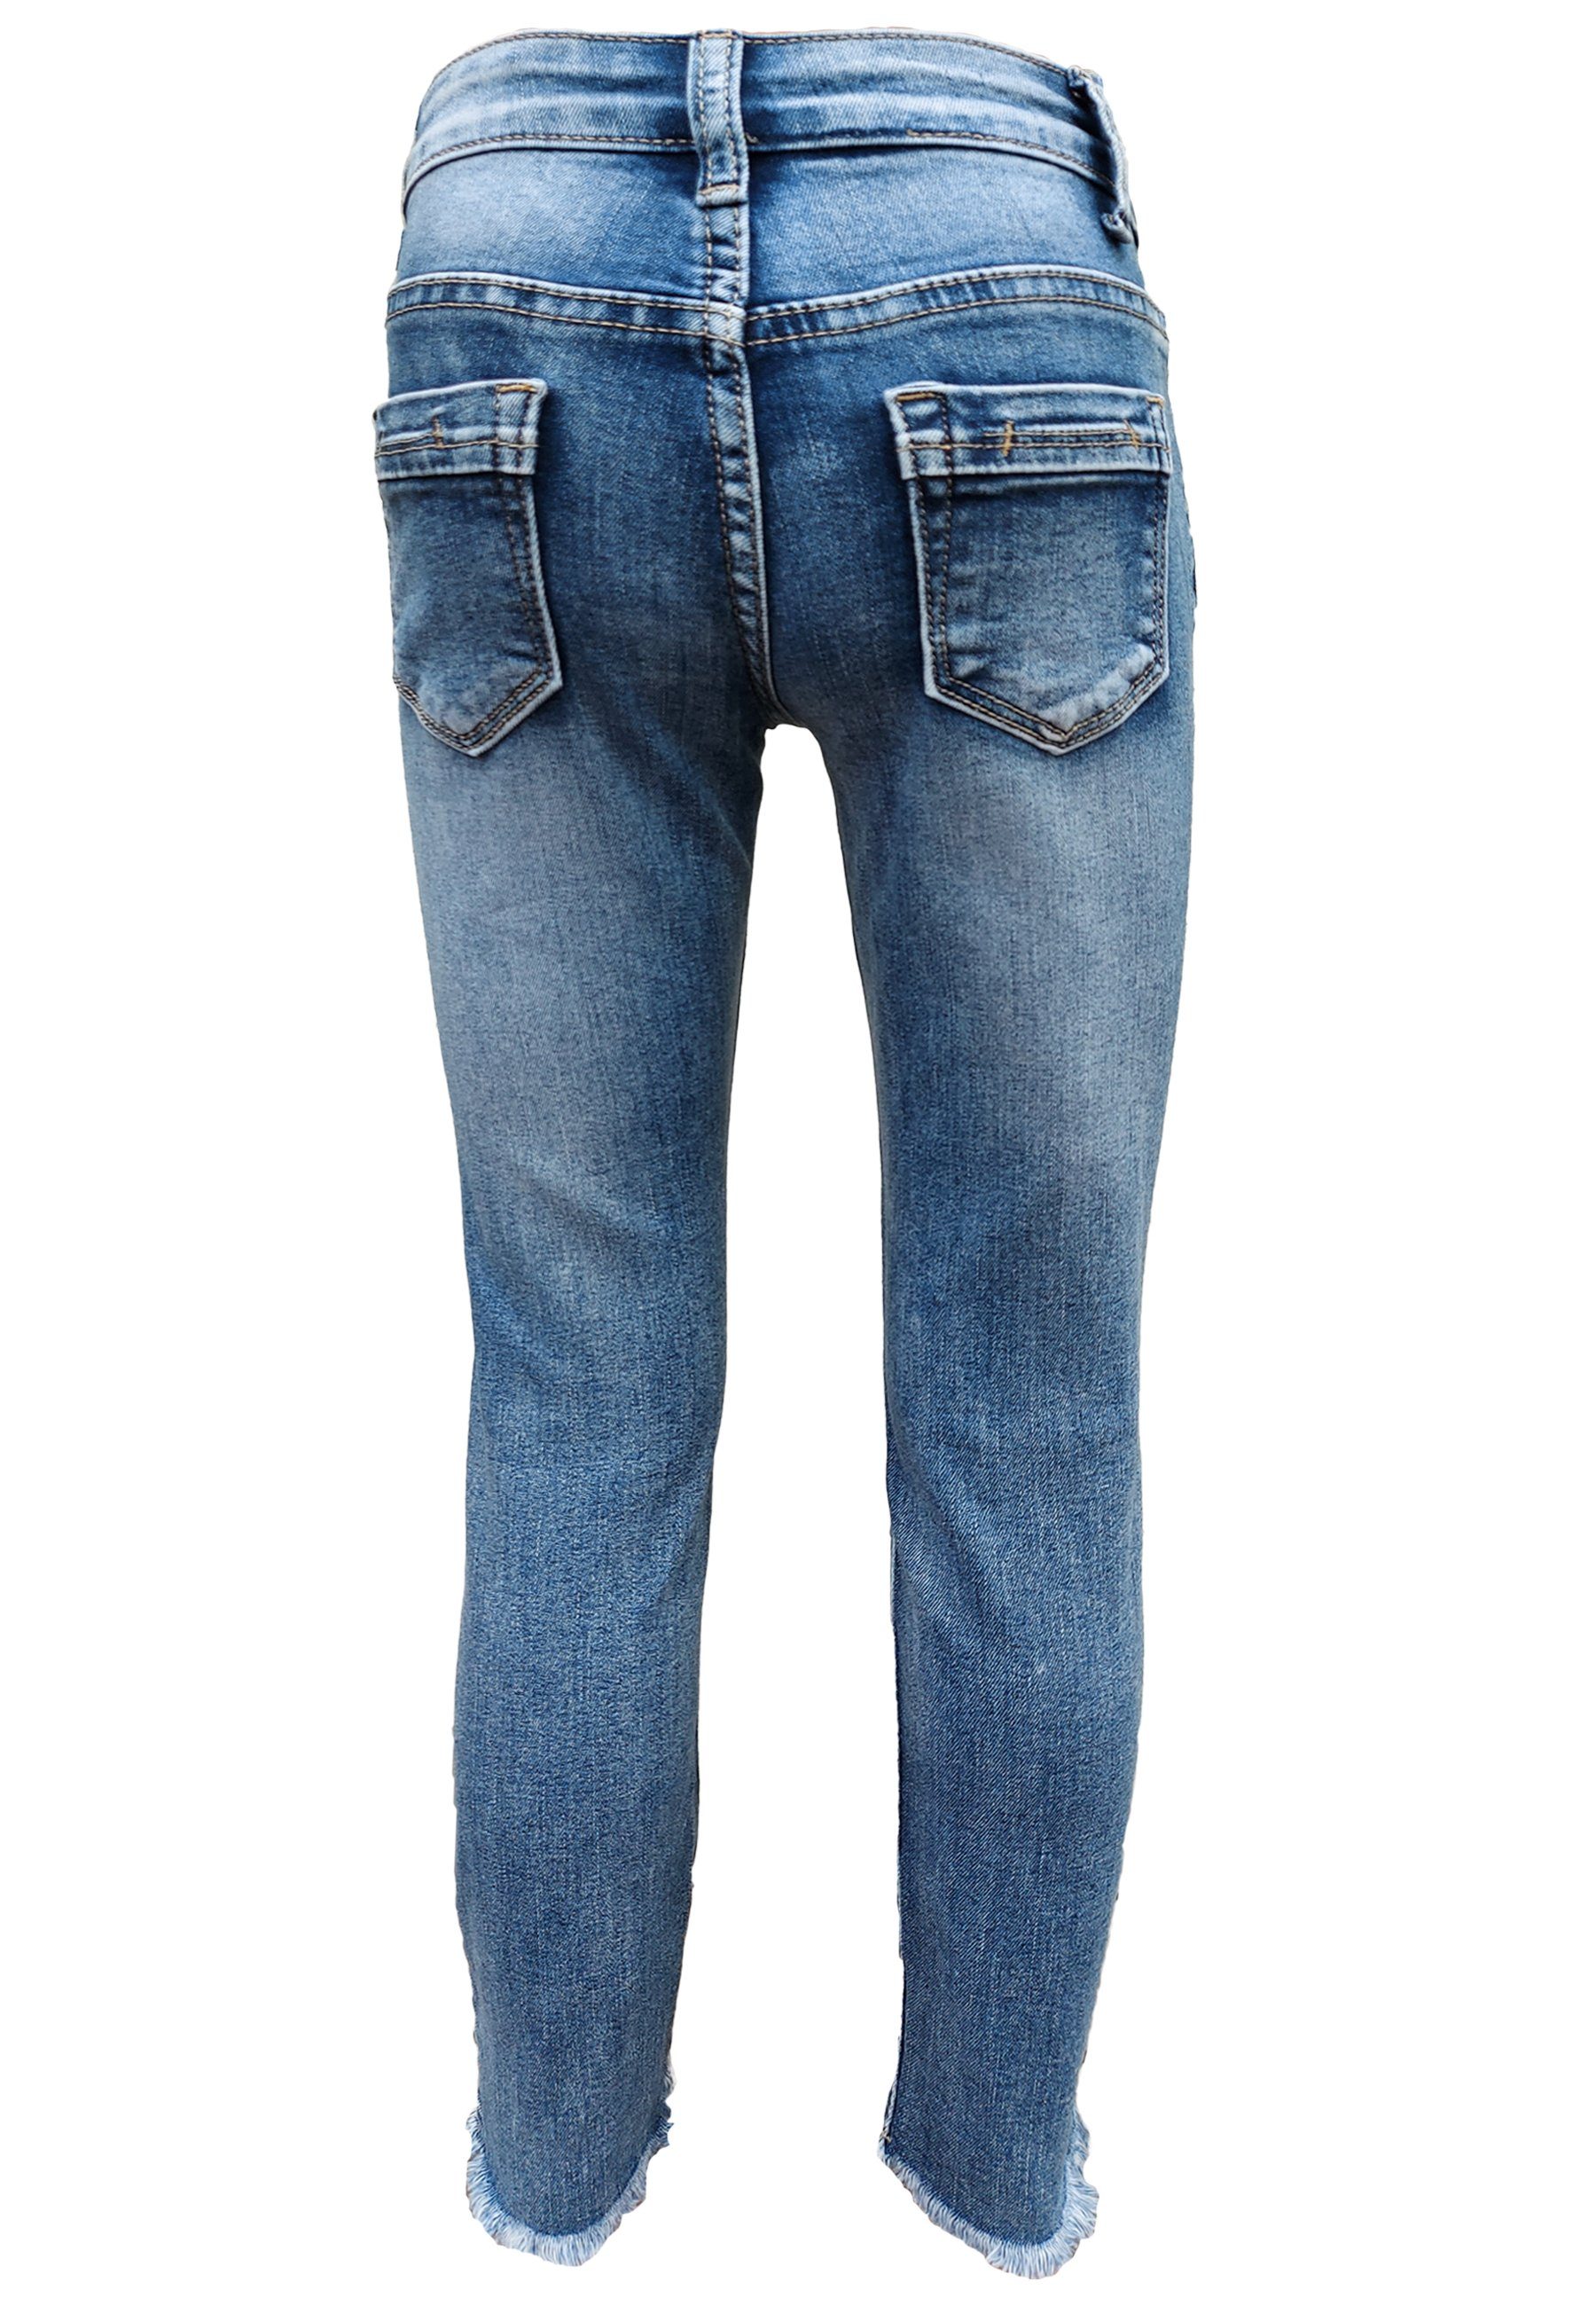 Saum ausgefranstem Family Trends Slim-fit-Jeans mit